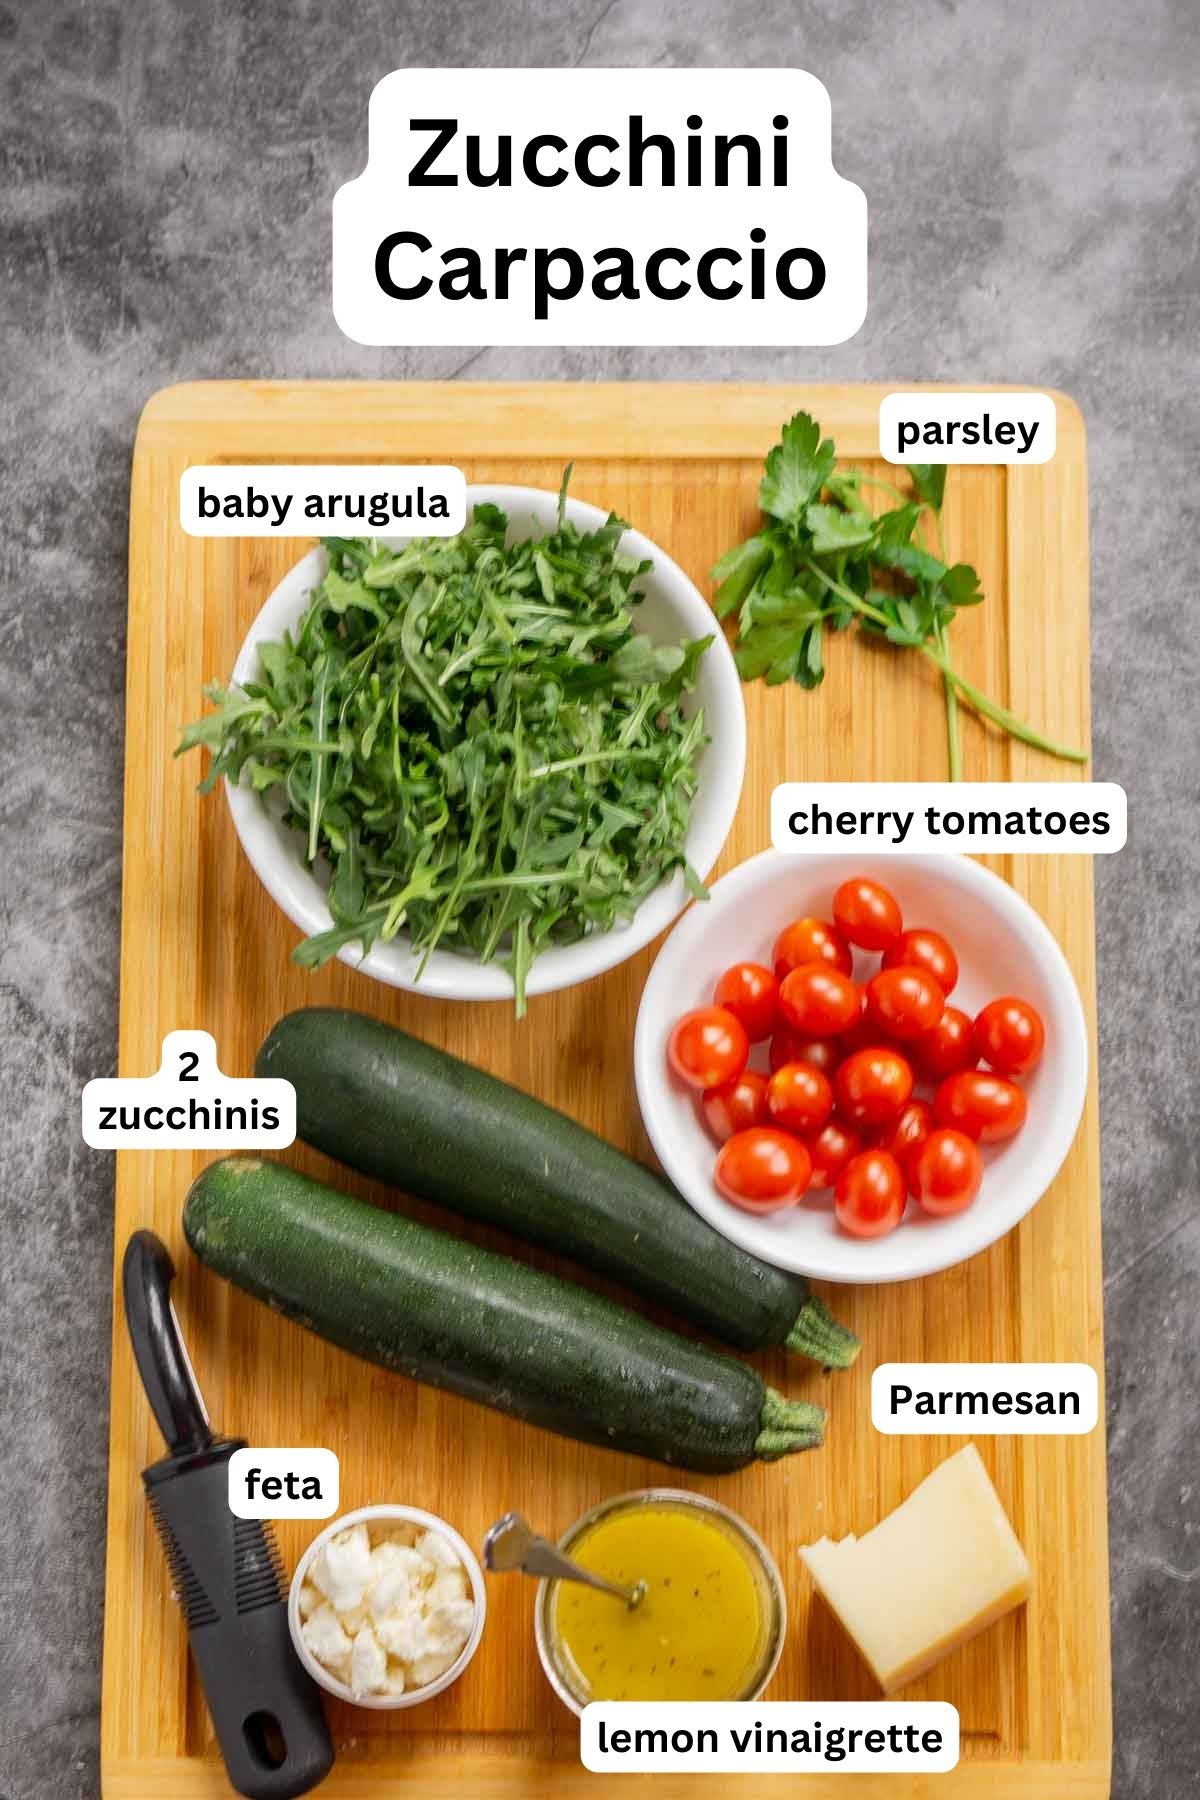 Ingredients to make zucchini carpaccio